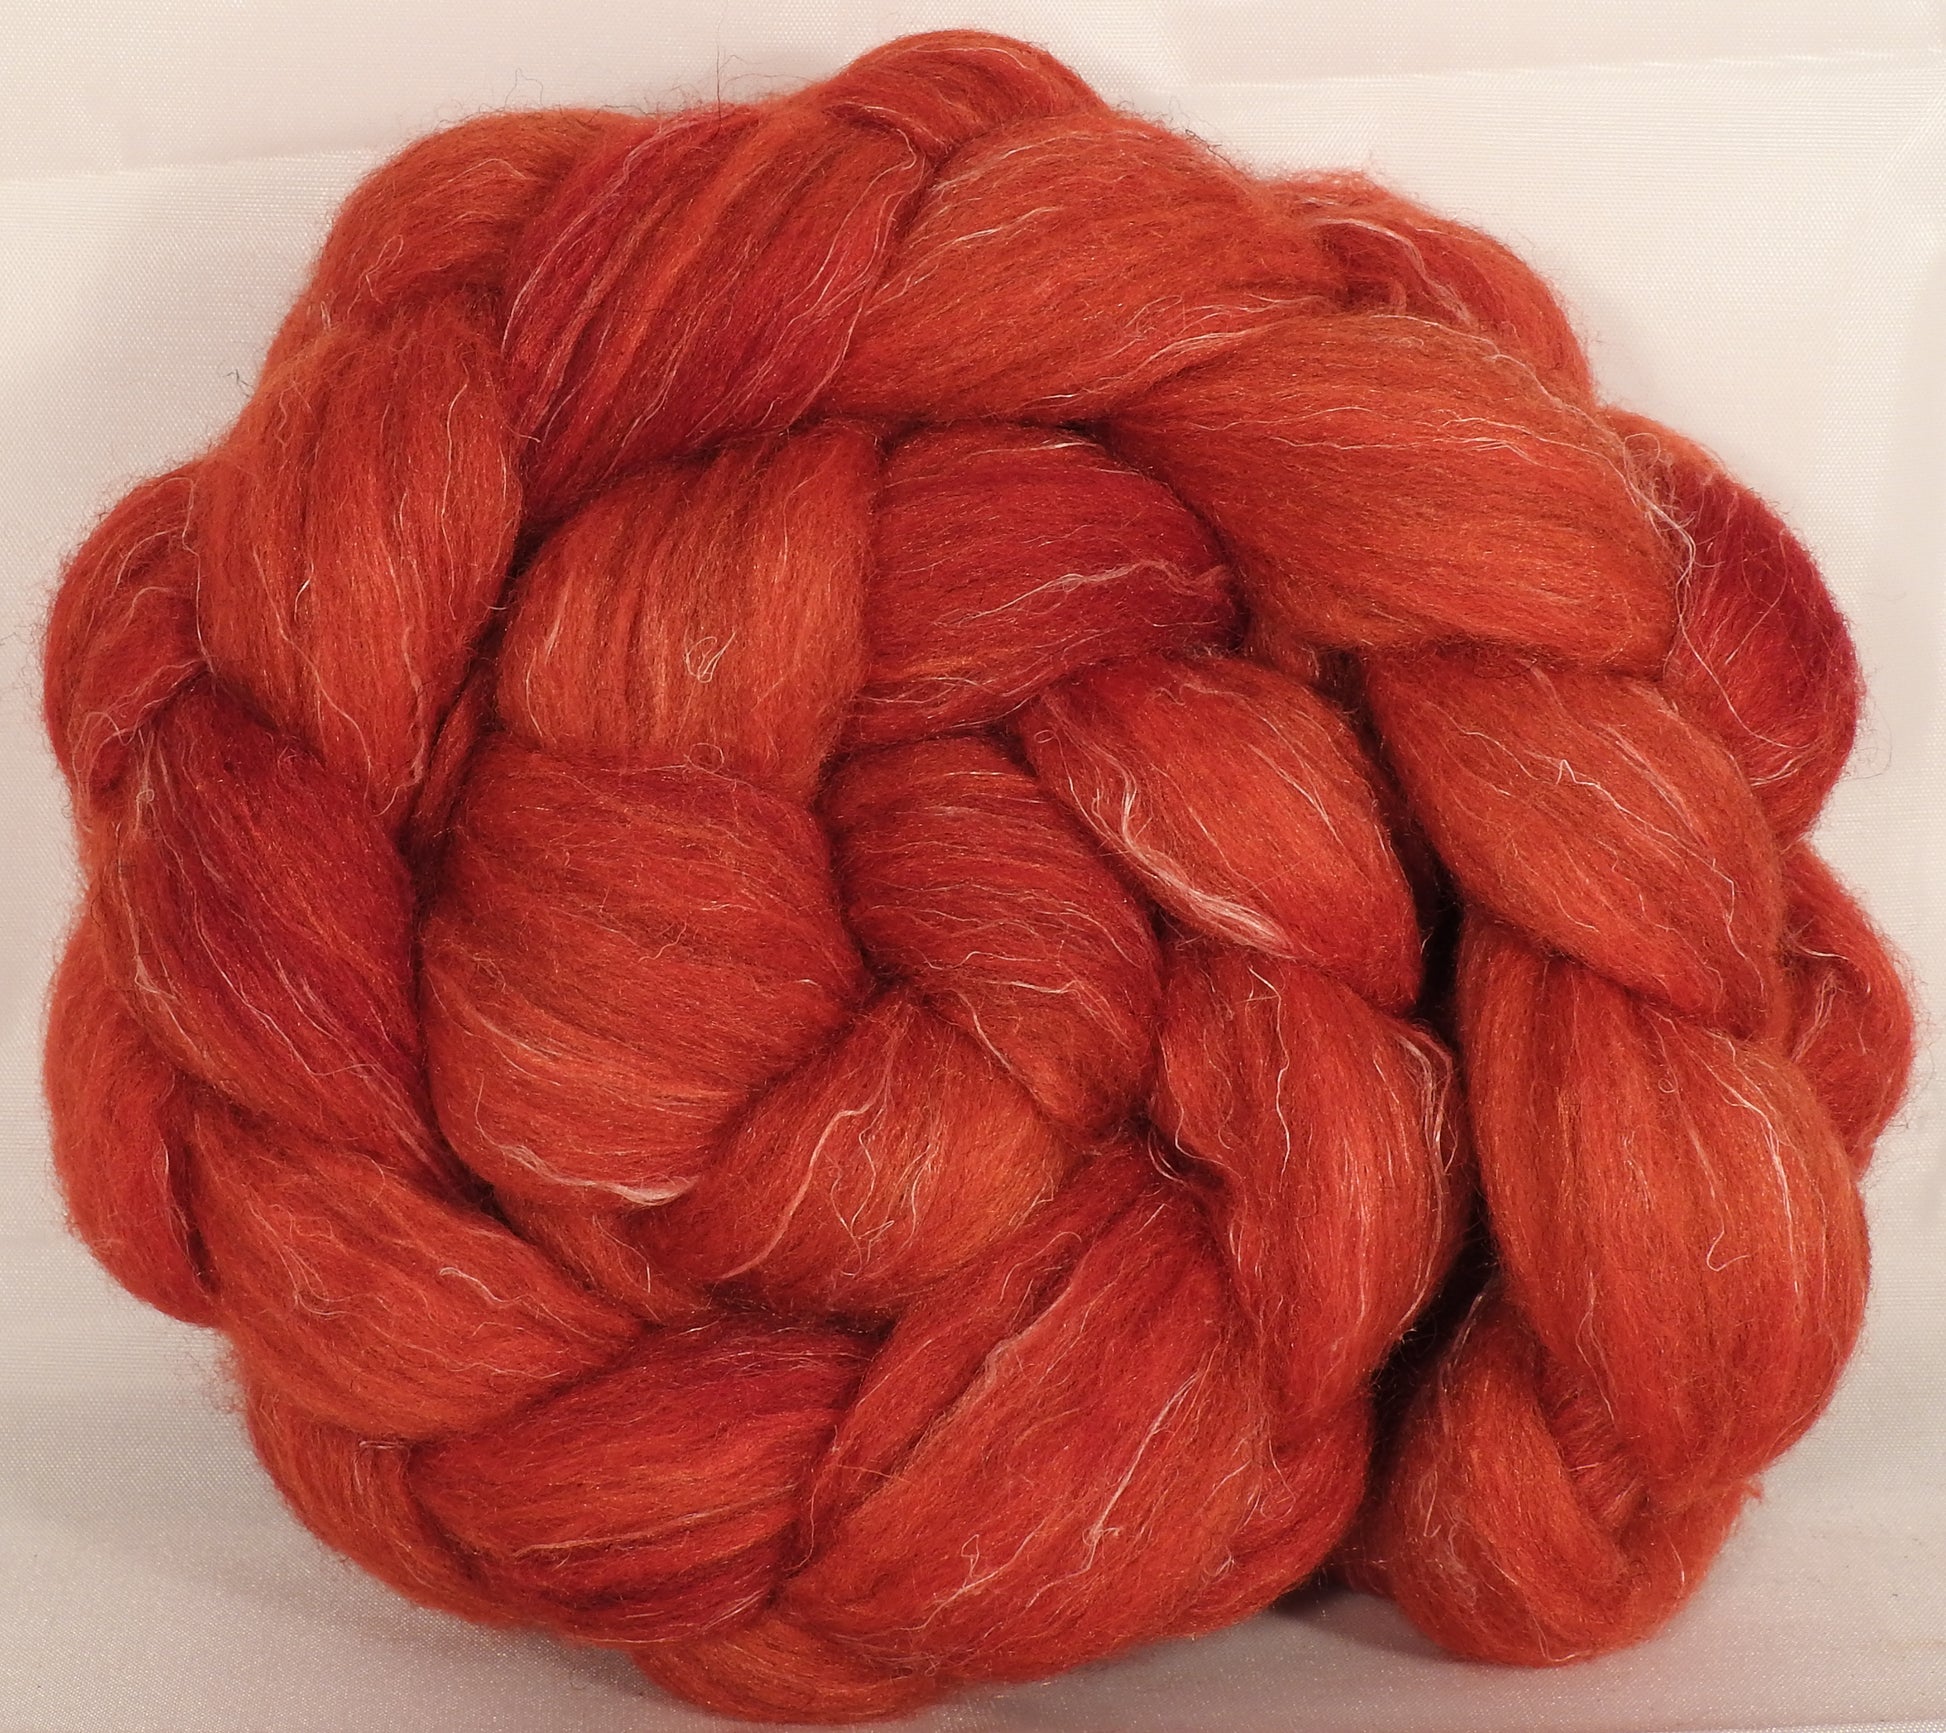 Batt in a Braid #38 - Holly Berry - (5.4 oz.)Shetland/ Falkland Merino / tussah silk/ flax (40/25/25/10) - Inglenook Fibers